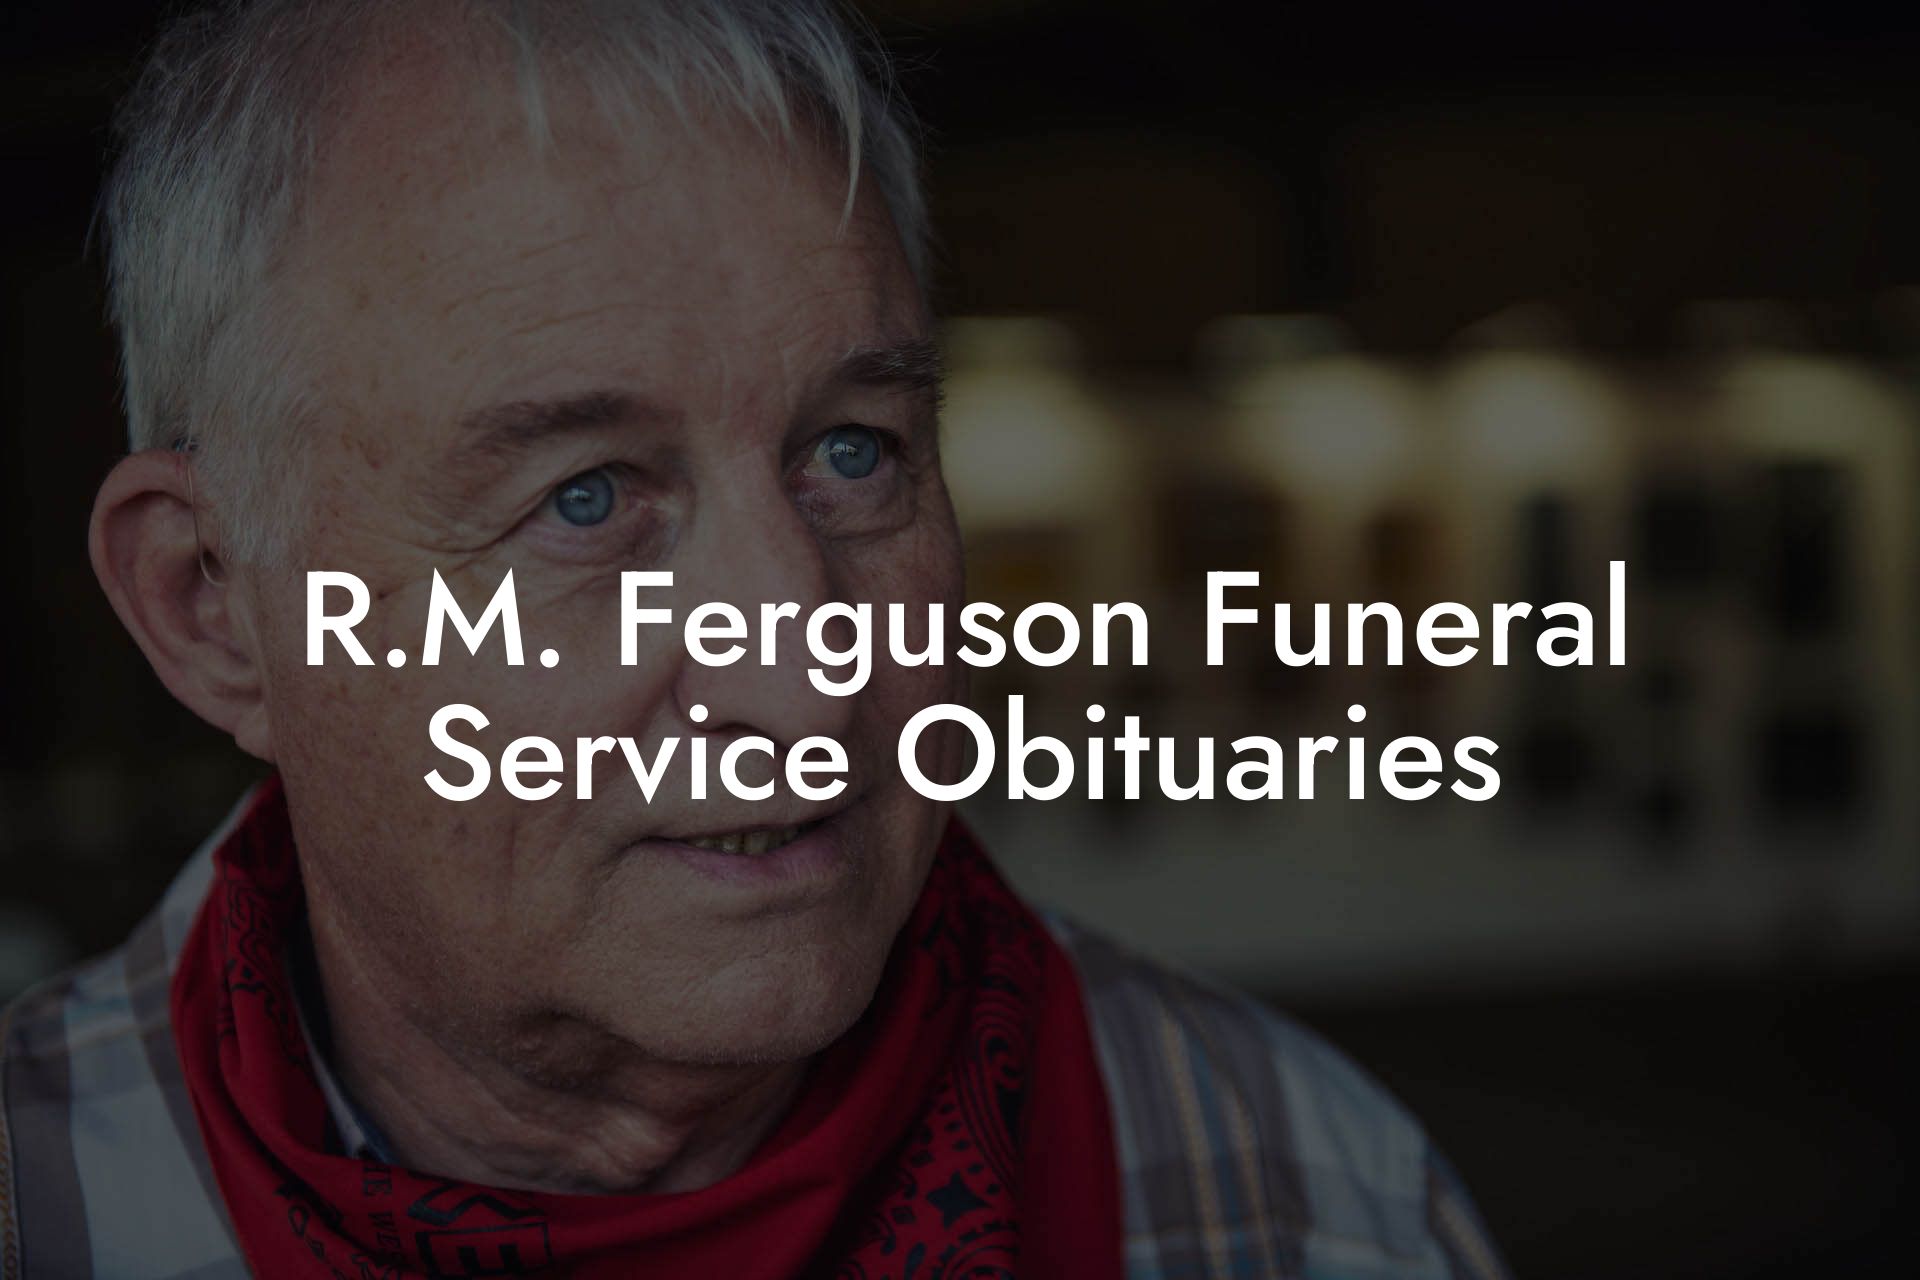 R.M. Ferguson Funeral Service Obituaries